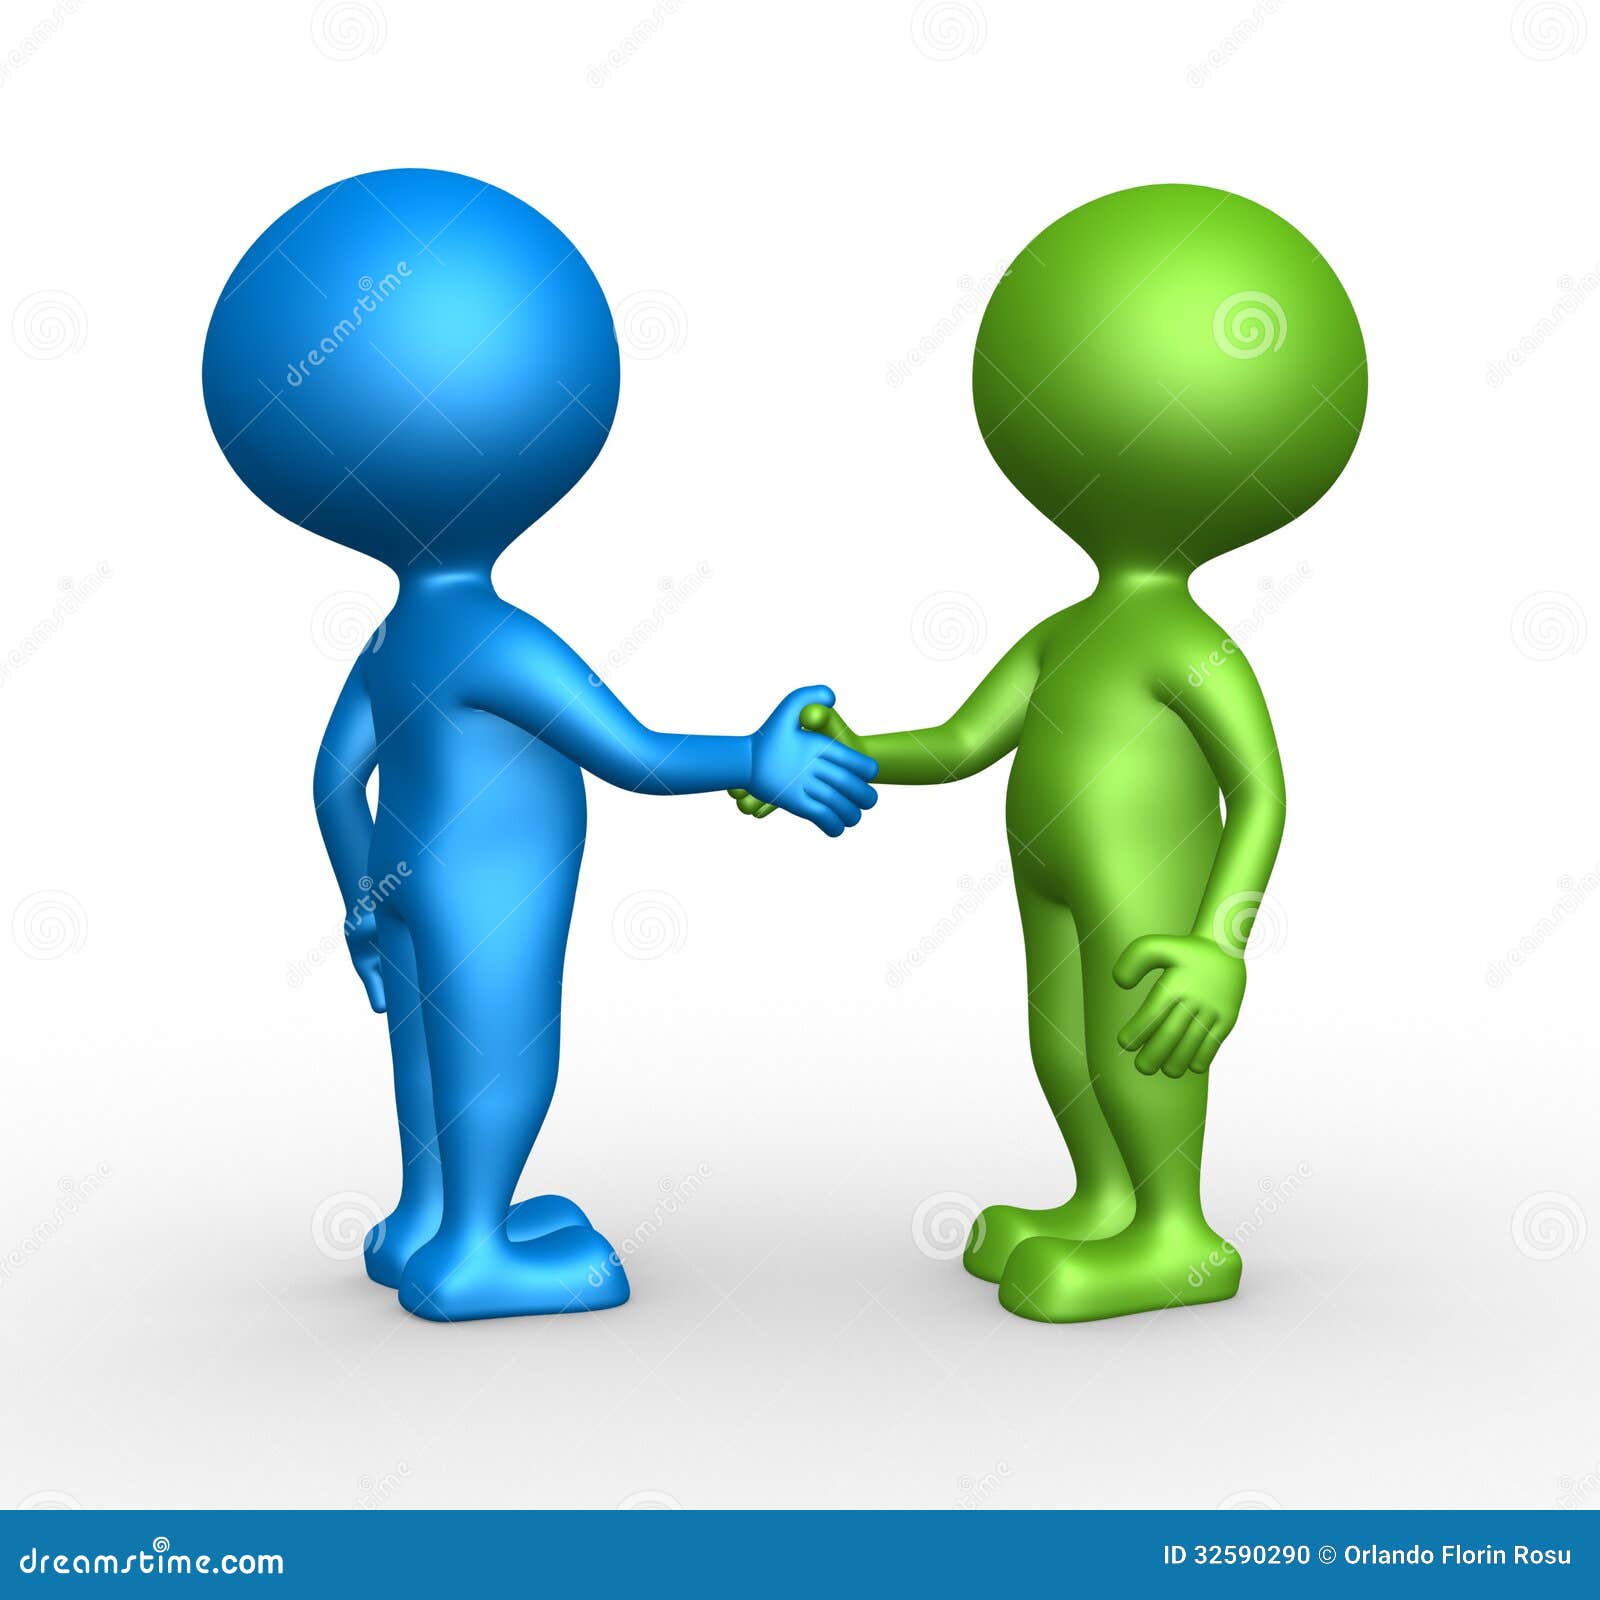 handshake clipart free download - photo #42